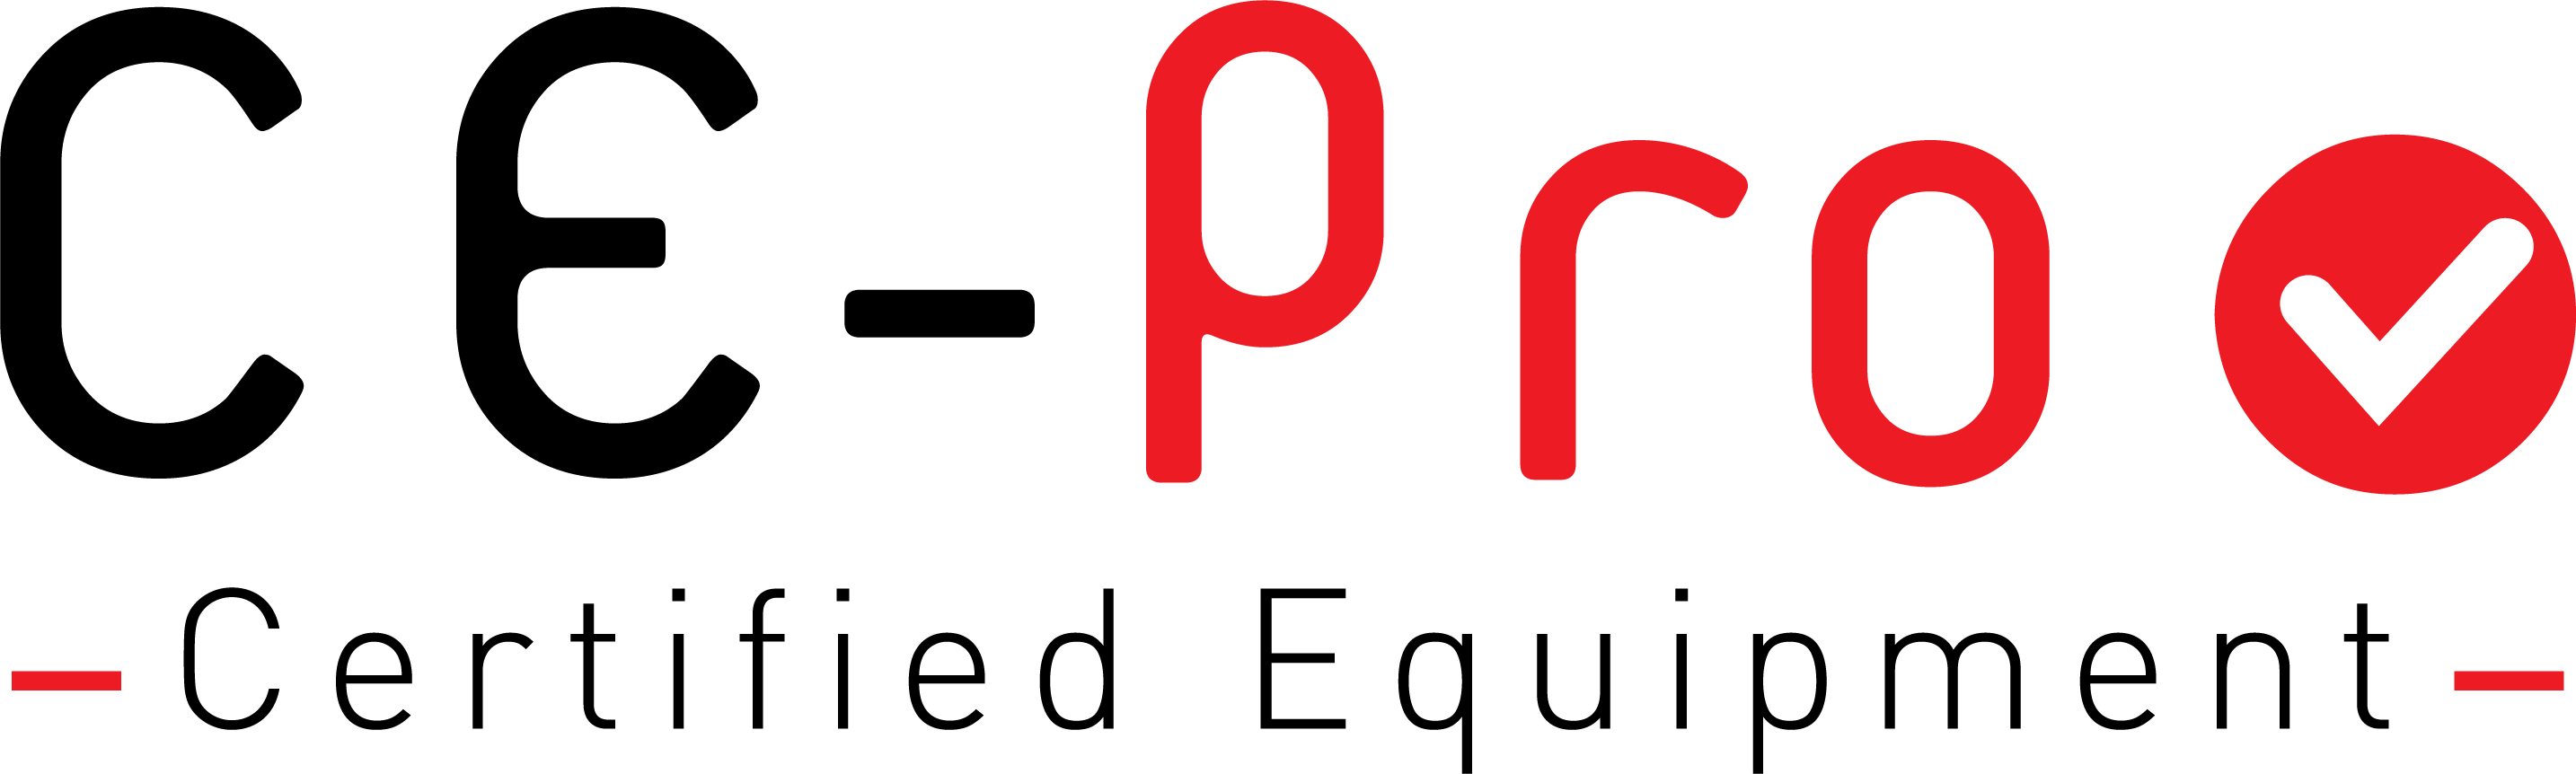 CE-Pro_Logo.png